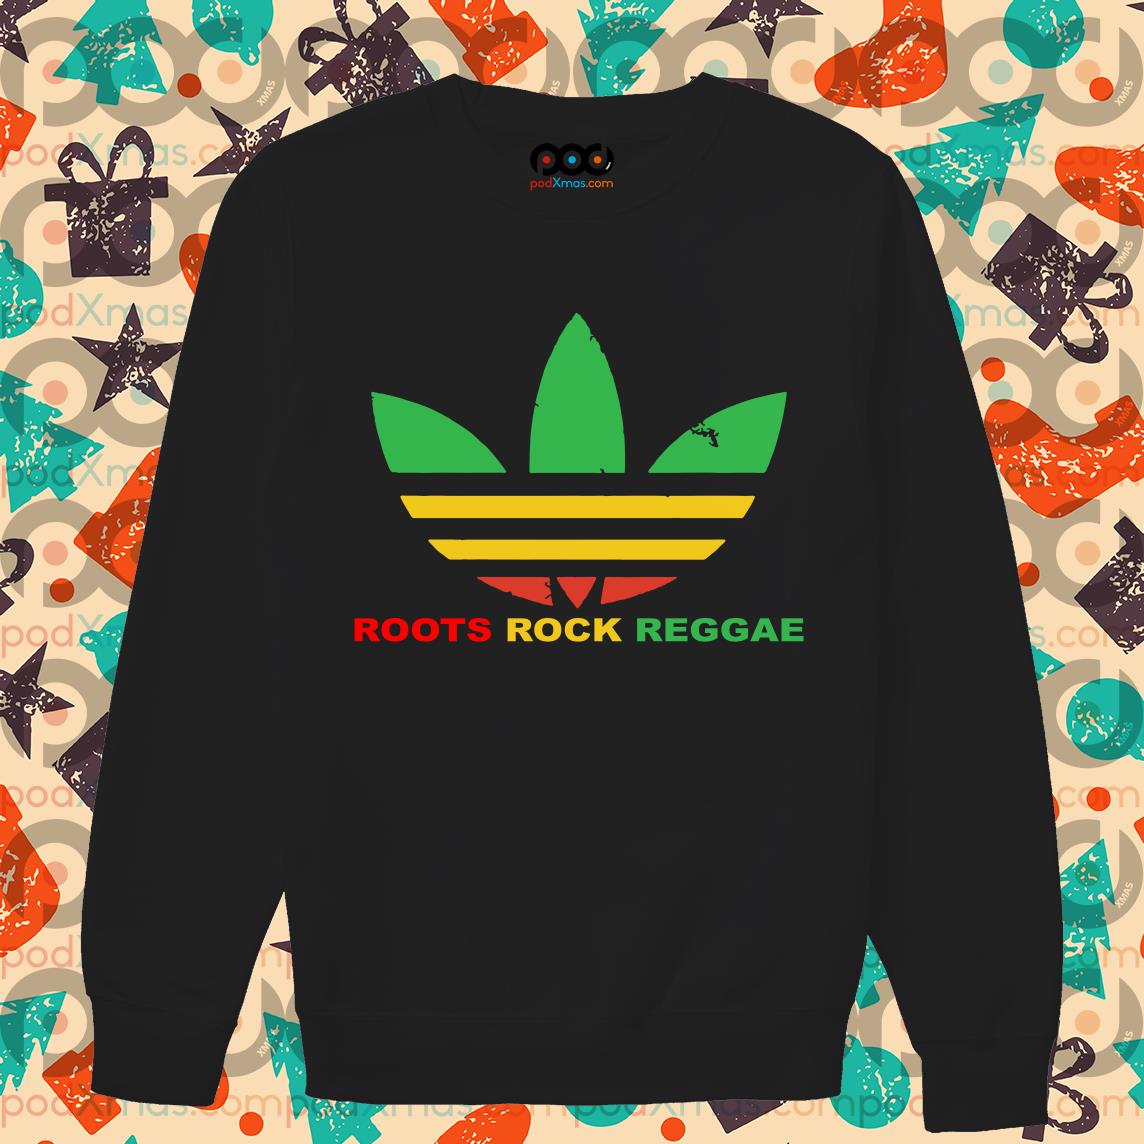 Roots Rock Reggae Adidas shirt For Shipping • PodXmas